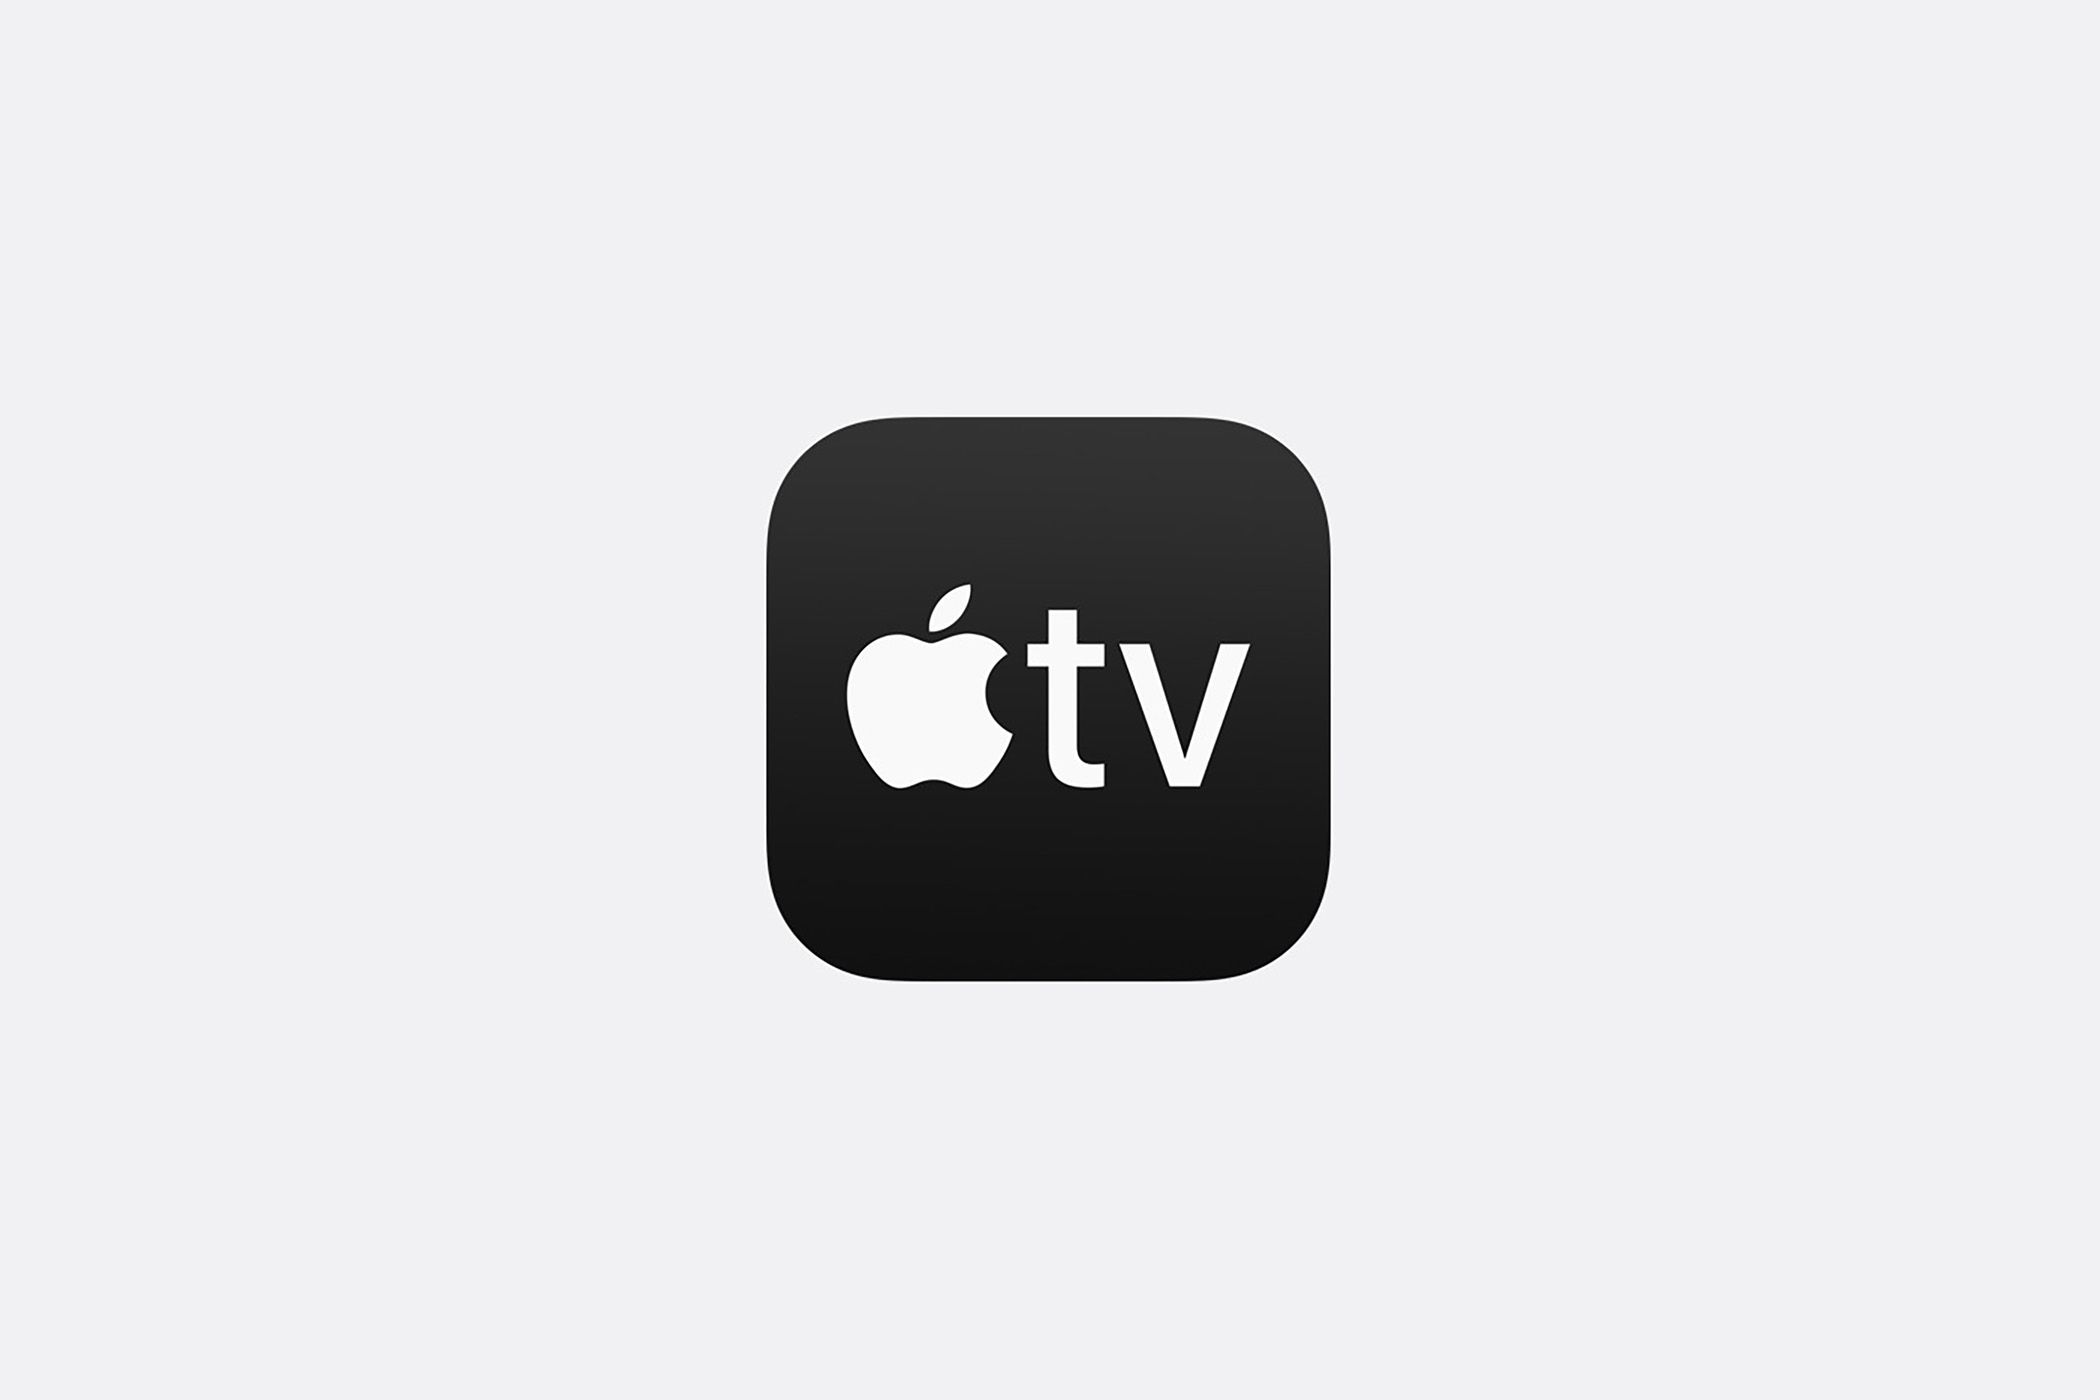 Apple TV logo on a gray background.